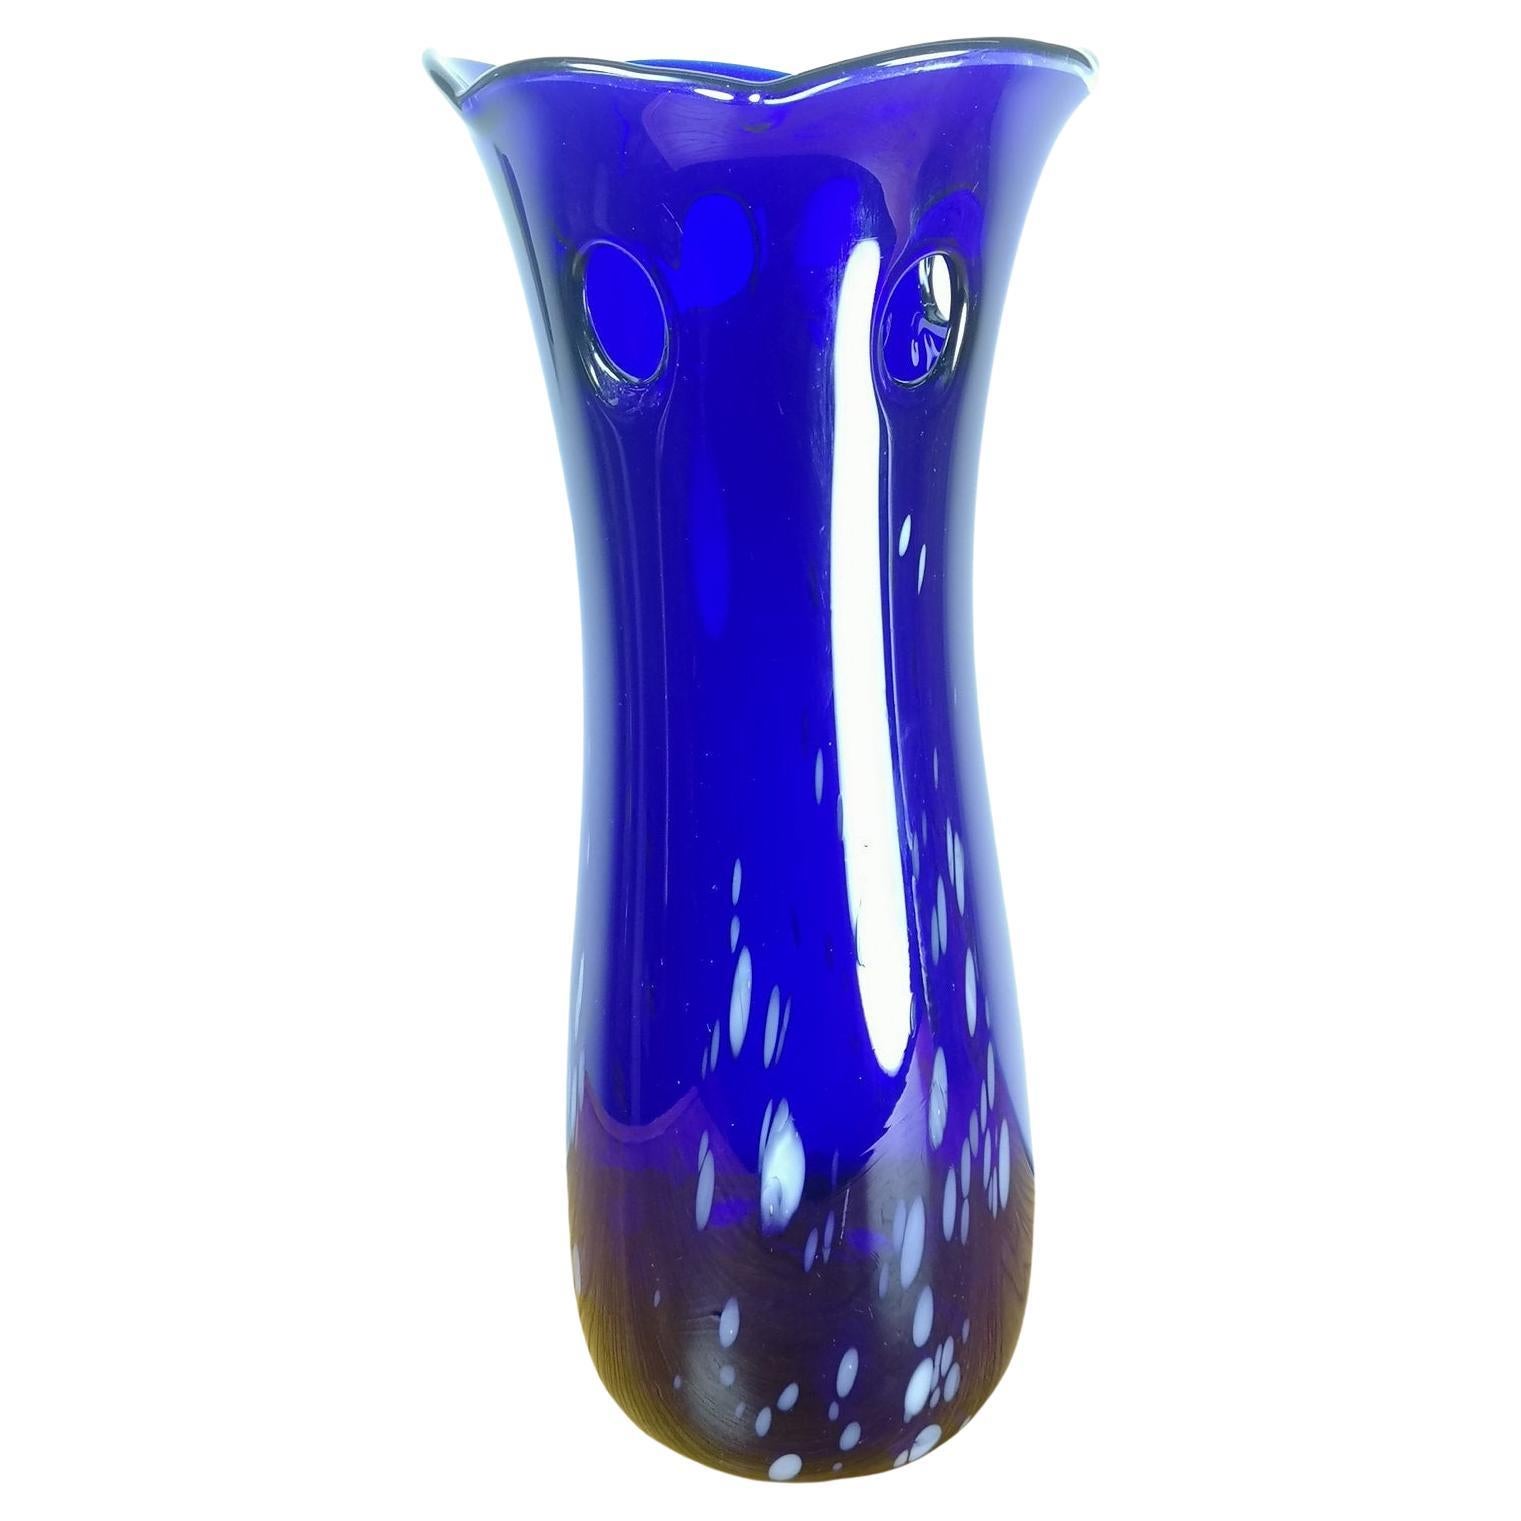 https://a.1stdibscdn.com/mid-century-blue-colored-glass-vase-for-sale/f_49541/f_348410321687177283037/f_34841032_1687177283435_bg_processed.jpg